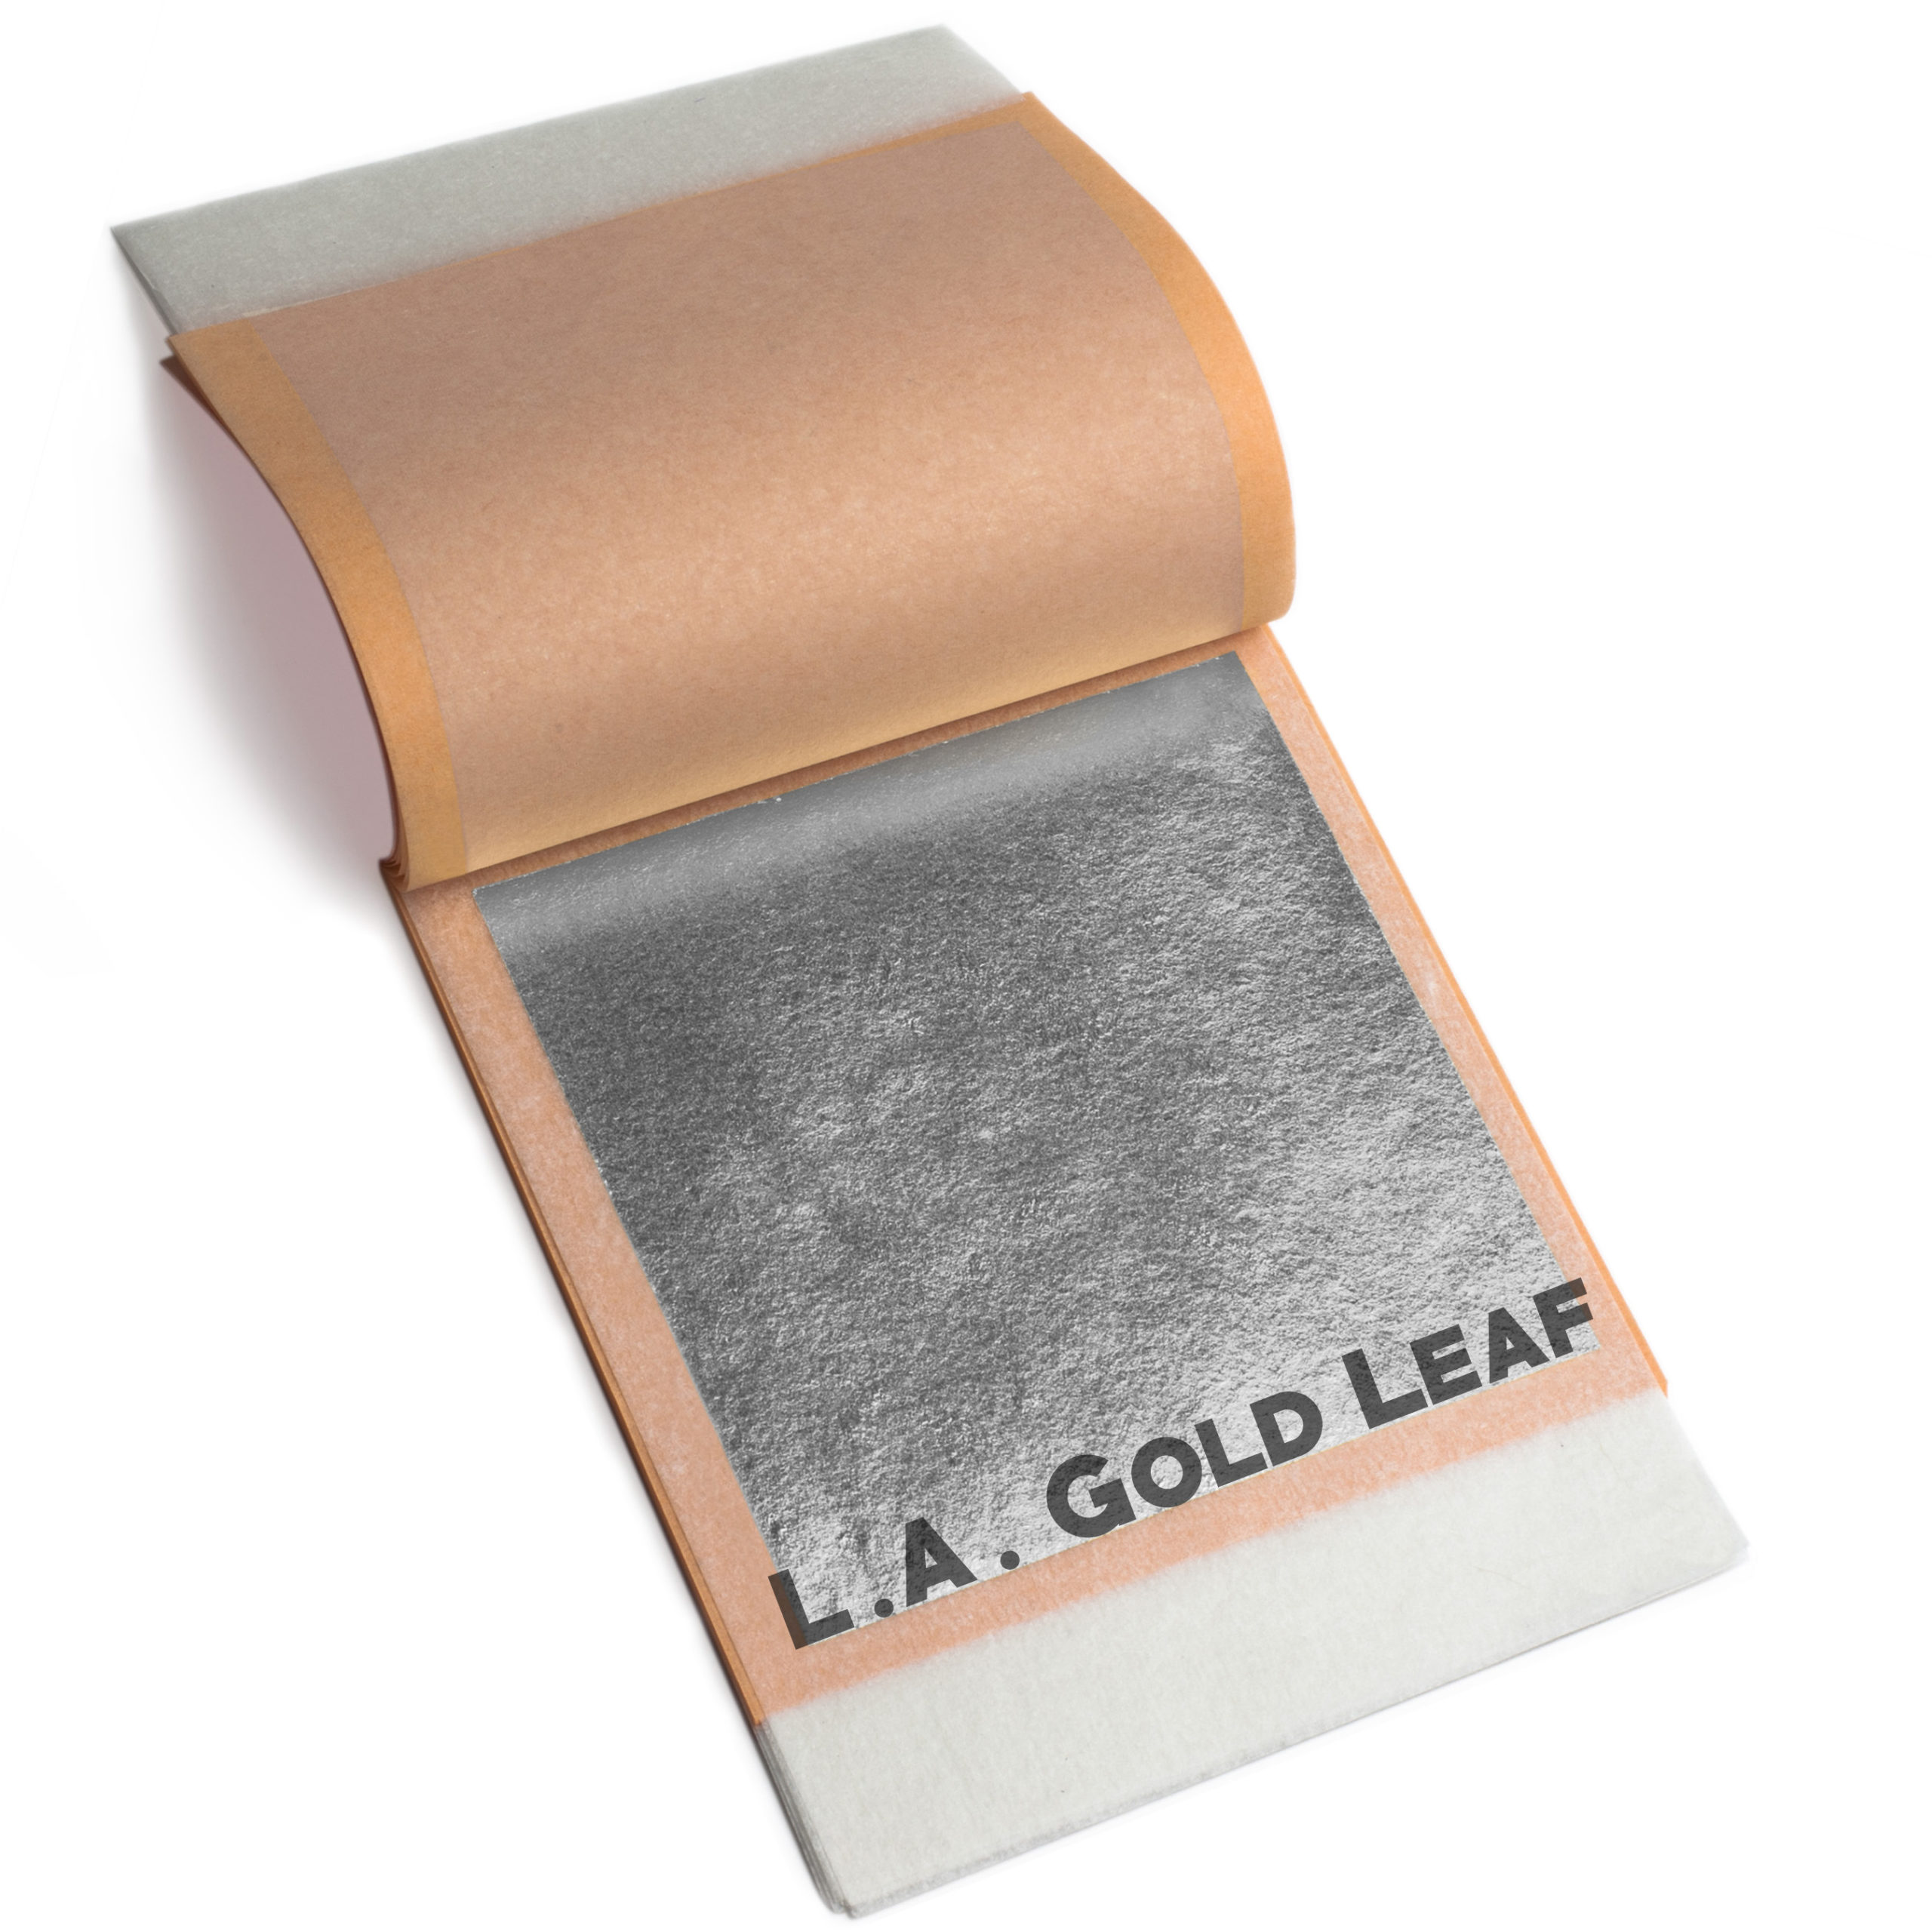 L.A. Gold Leaf Imitation Gold Flakes, Imitation Silver Flakes